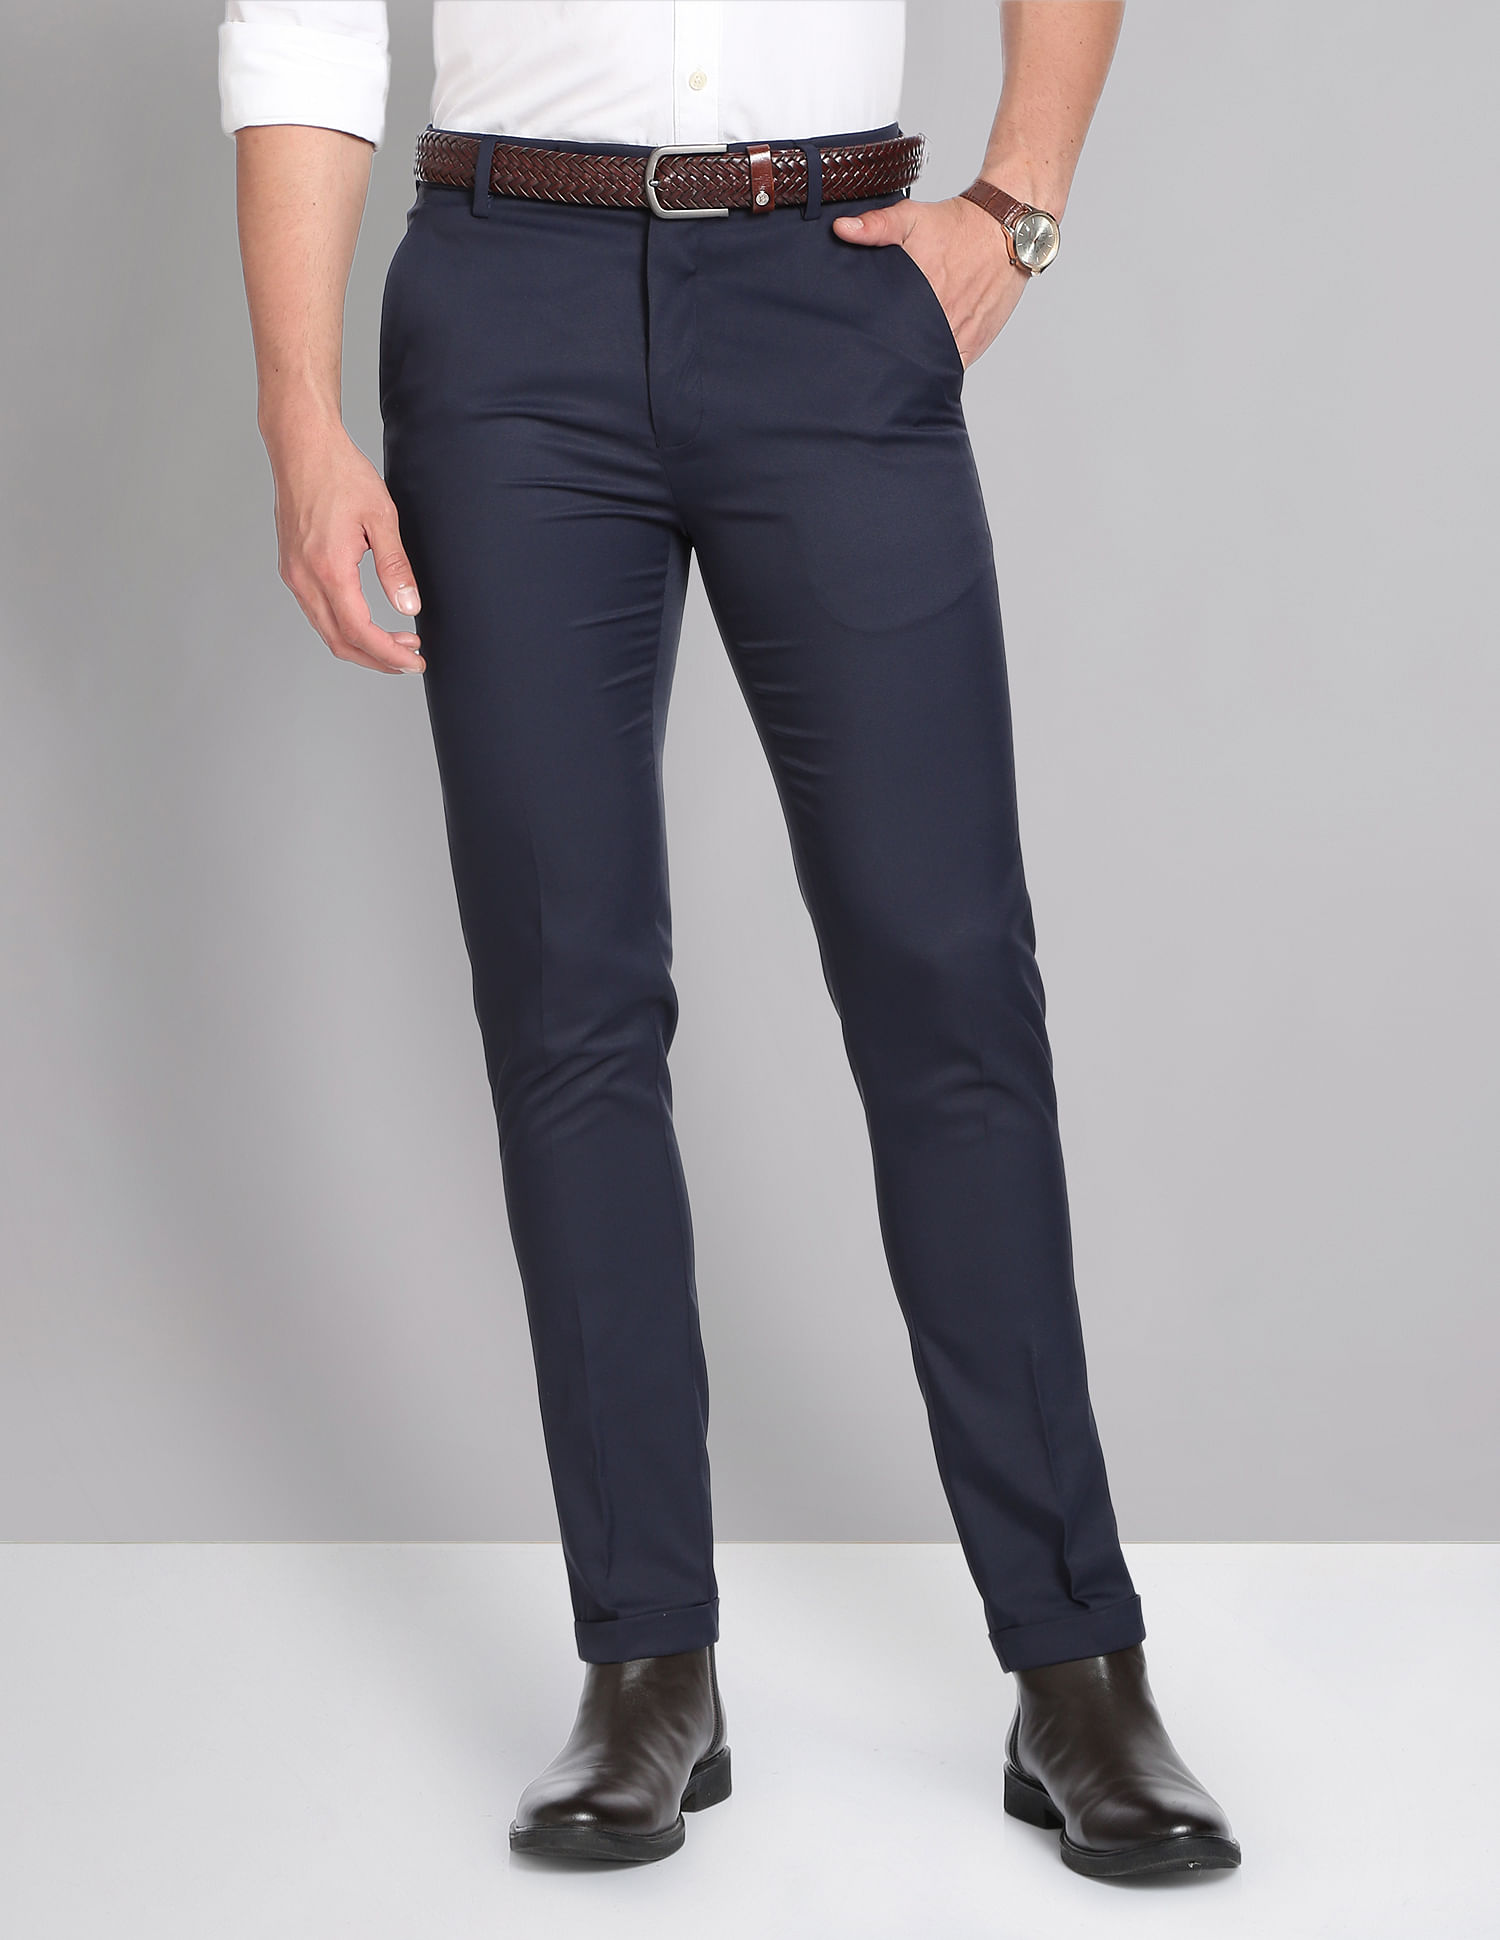 Buy RR Fashion Mens Regular Formal Trouser 28 Black at Amazonin